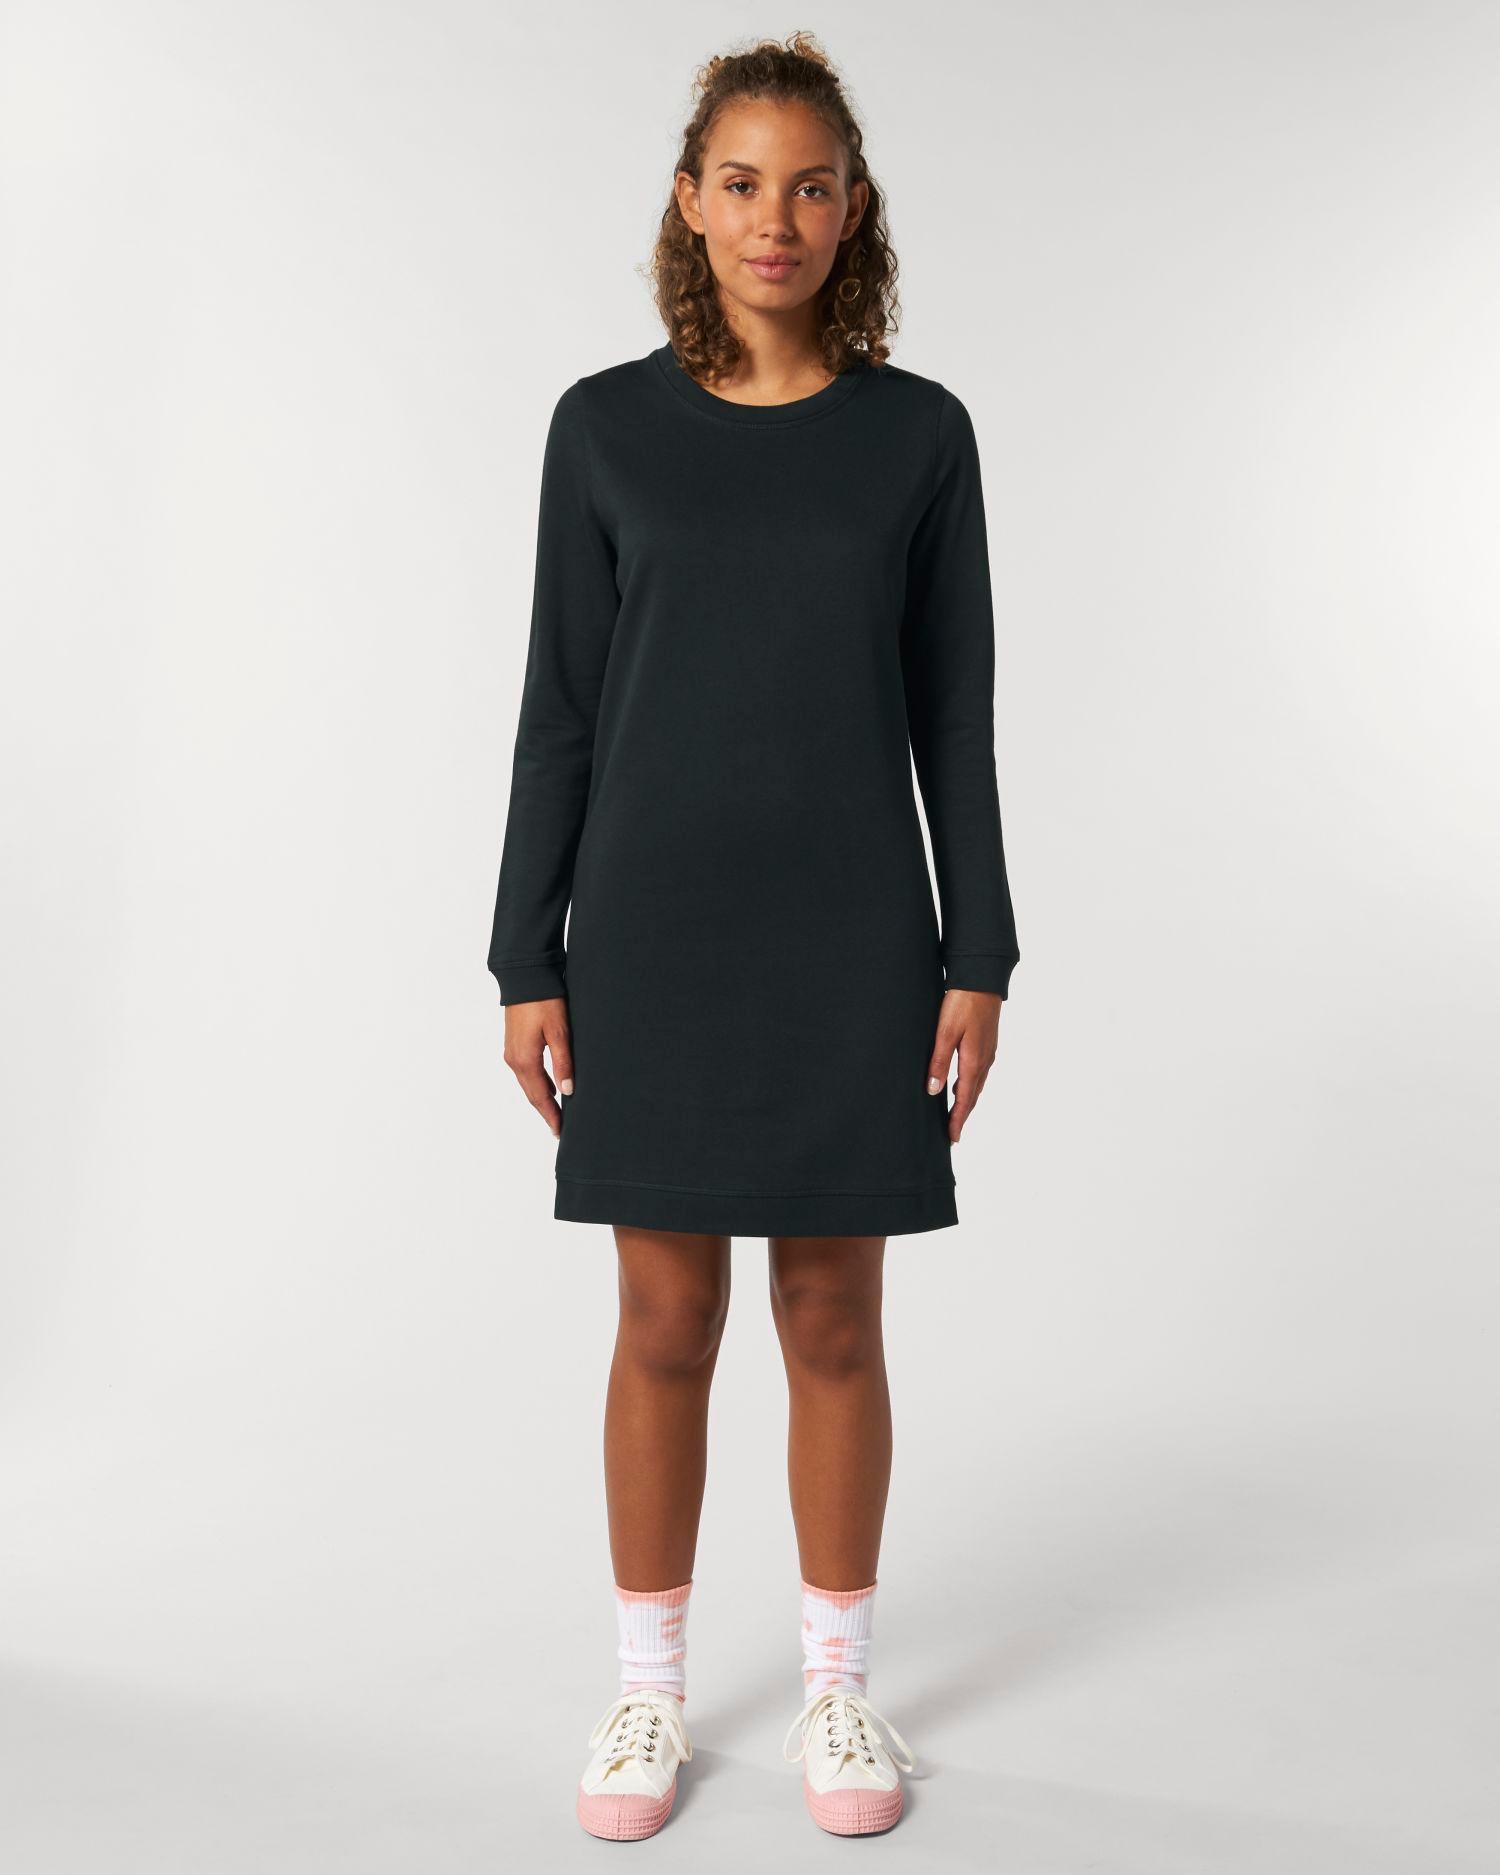 Stella Kicks Round Neck Sweatshirt Dress With Embroidery Or Digital Printing Black